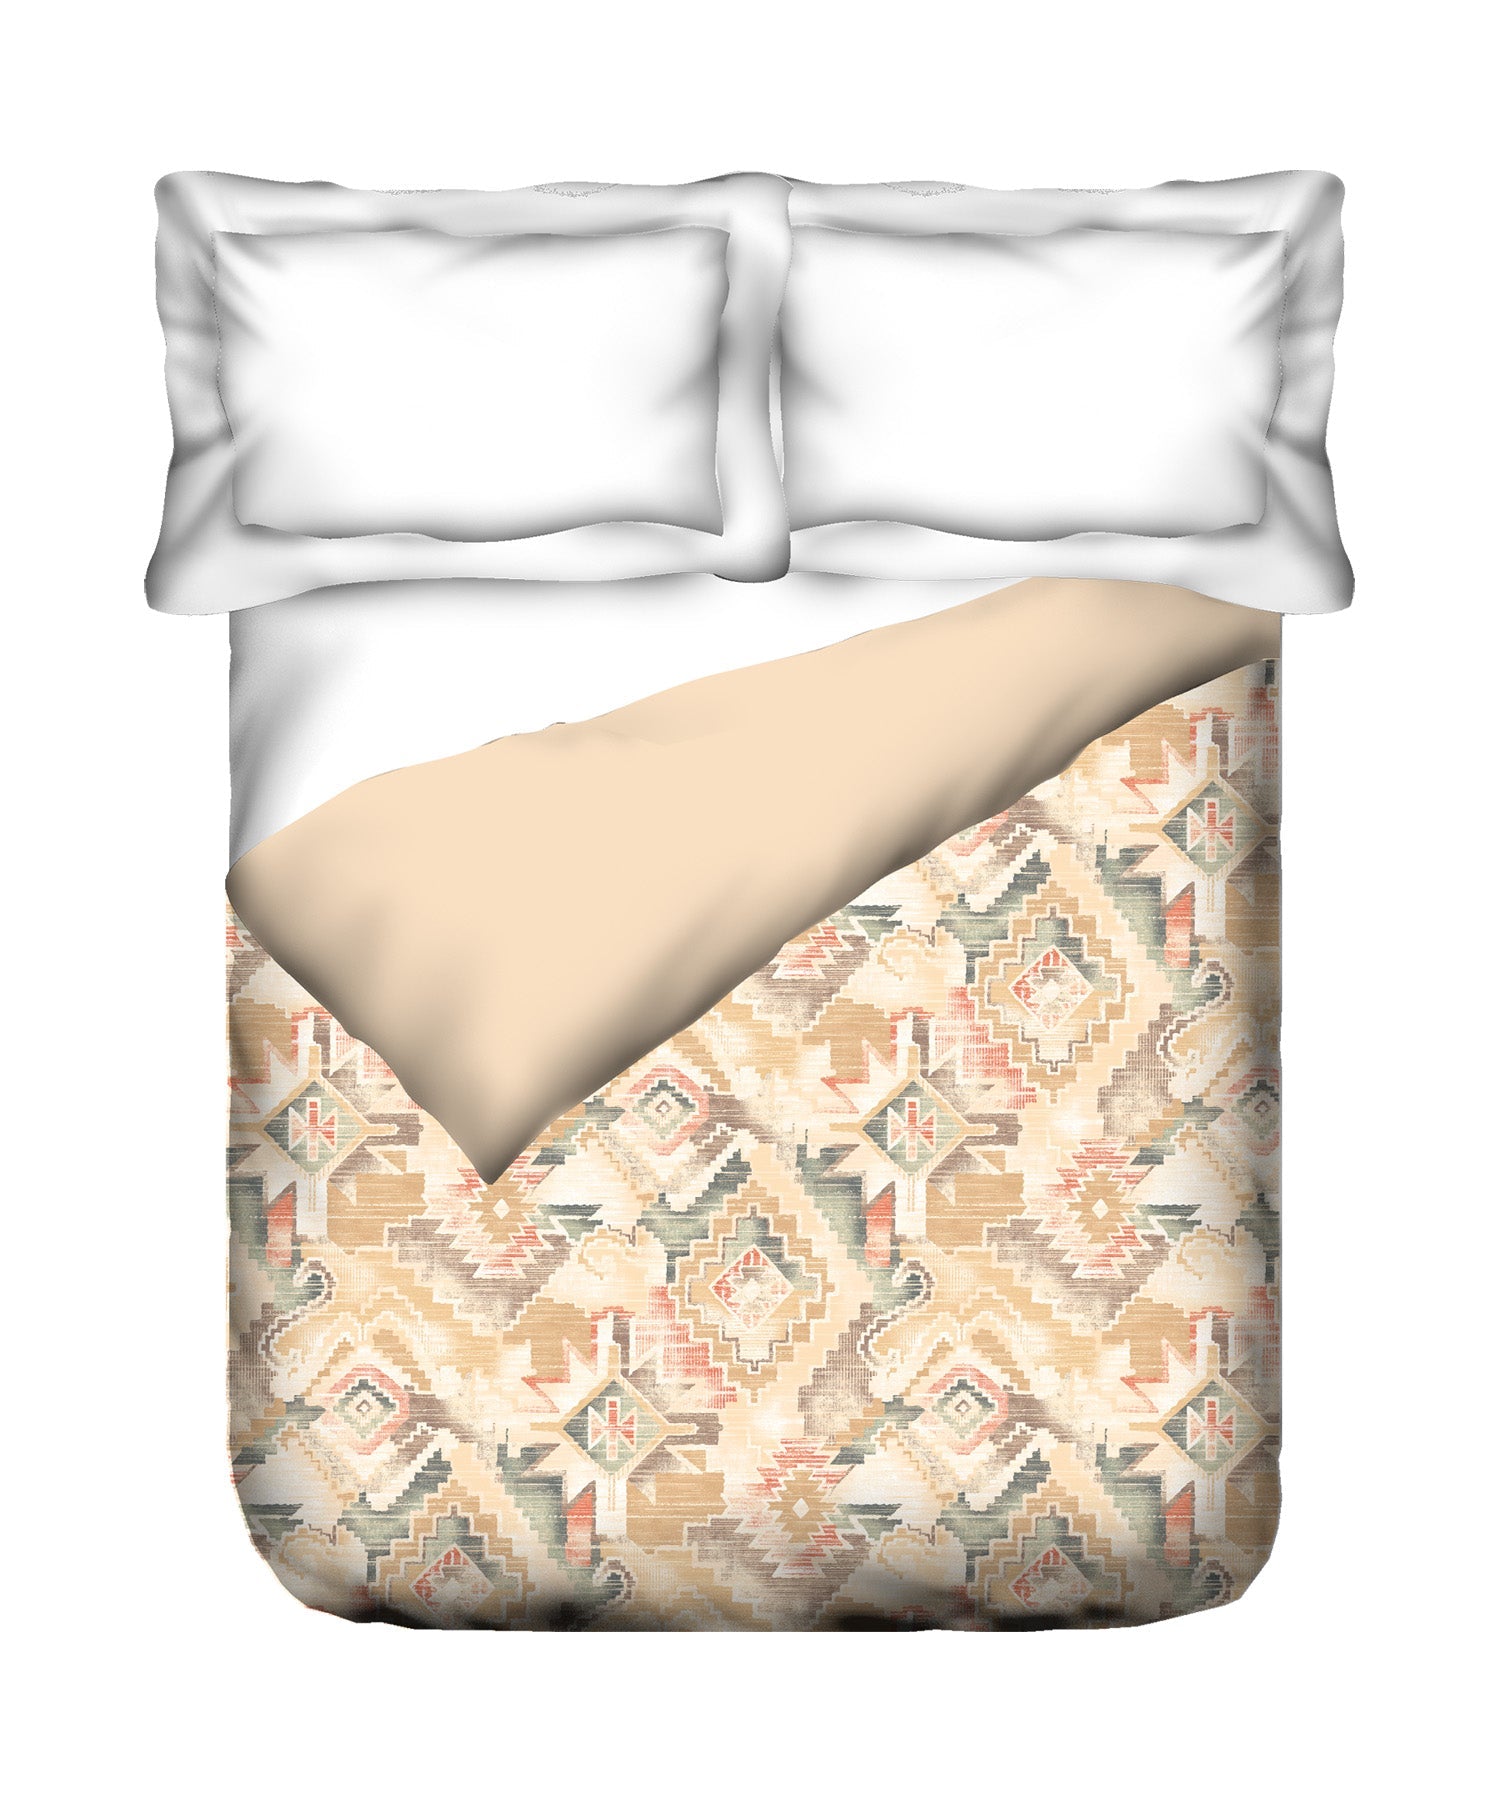 Double Comforter ₹6399/-